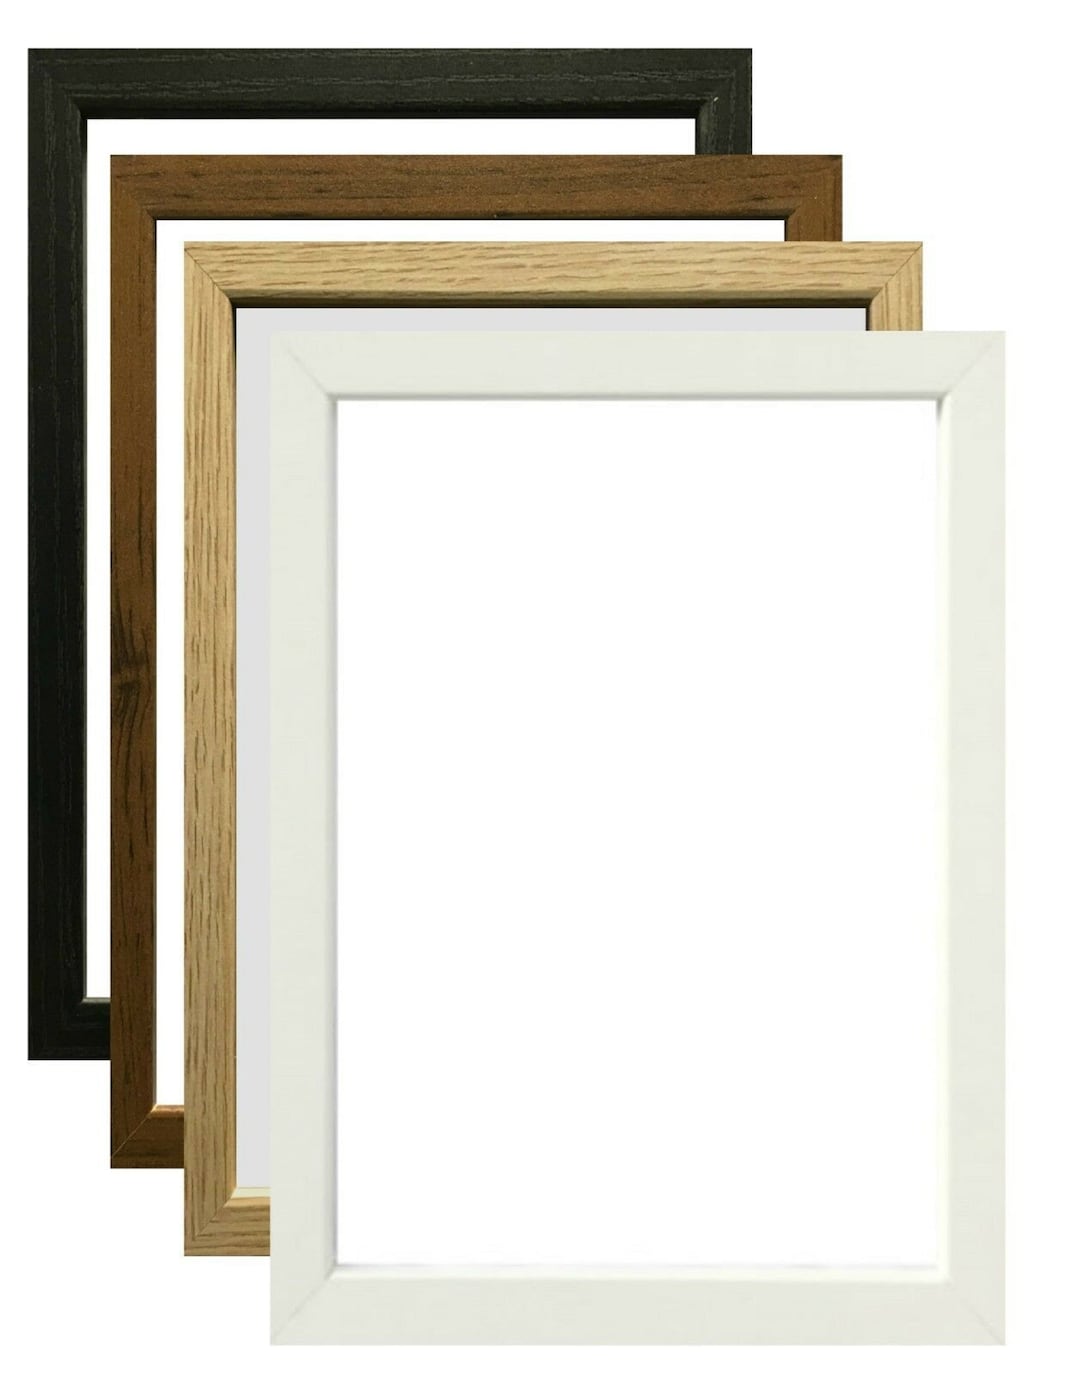 Frame MDF 30x40 Cm, Black or White, 12x16 